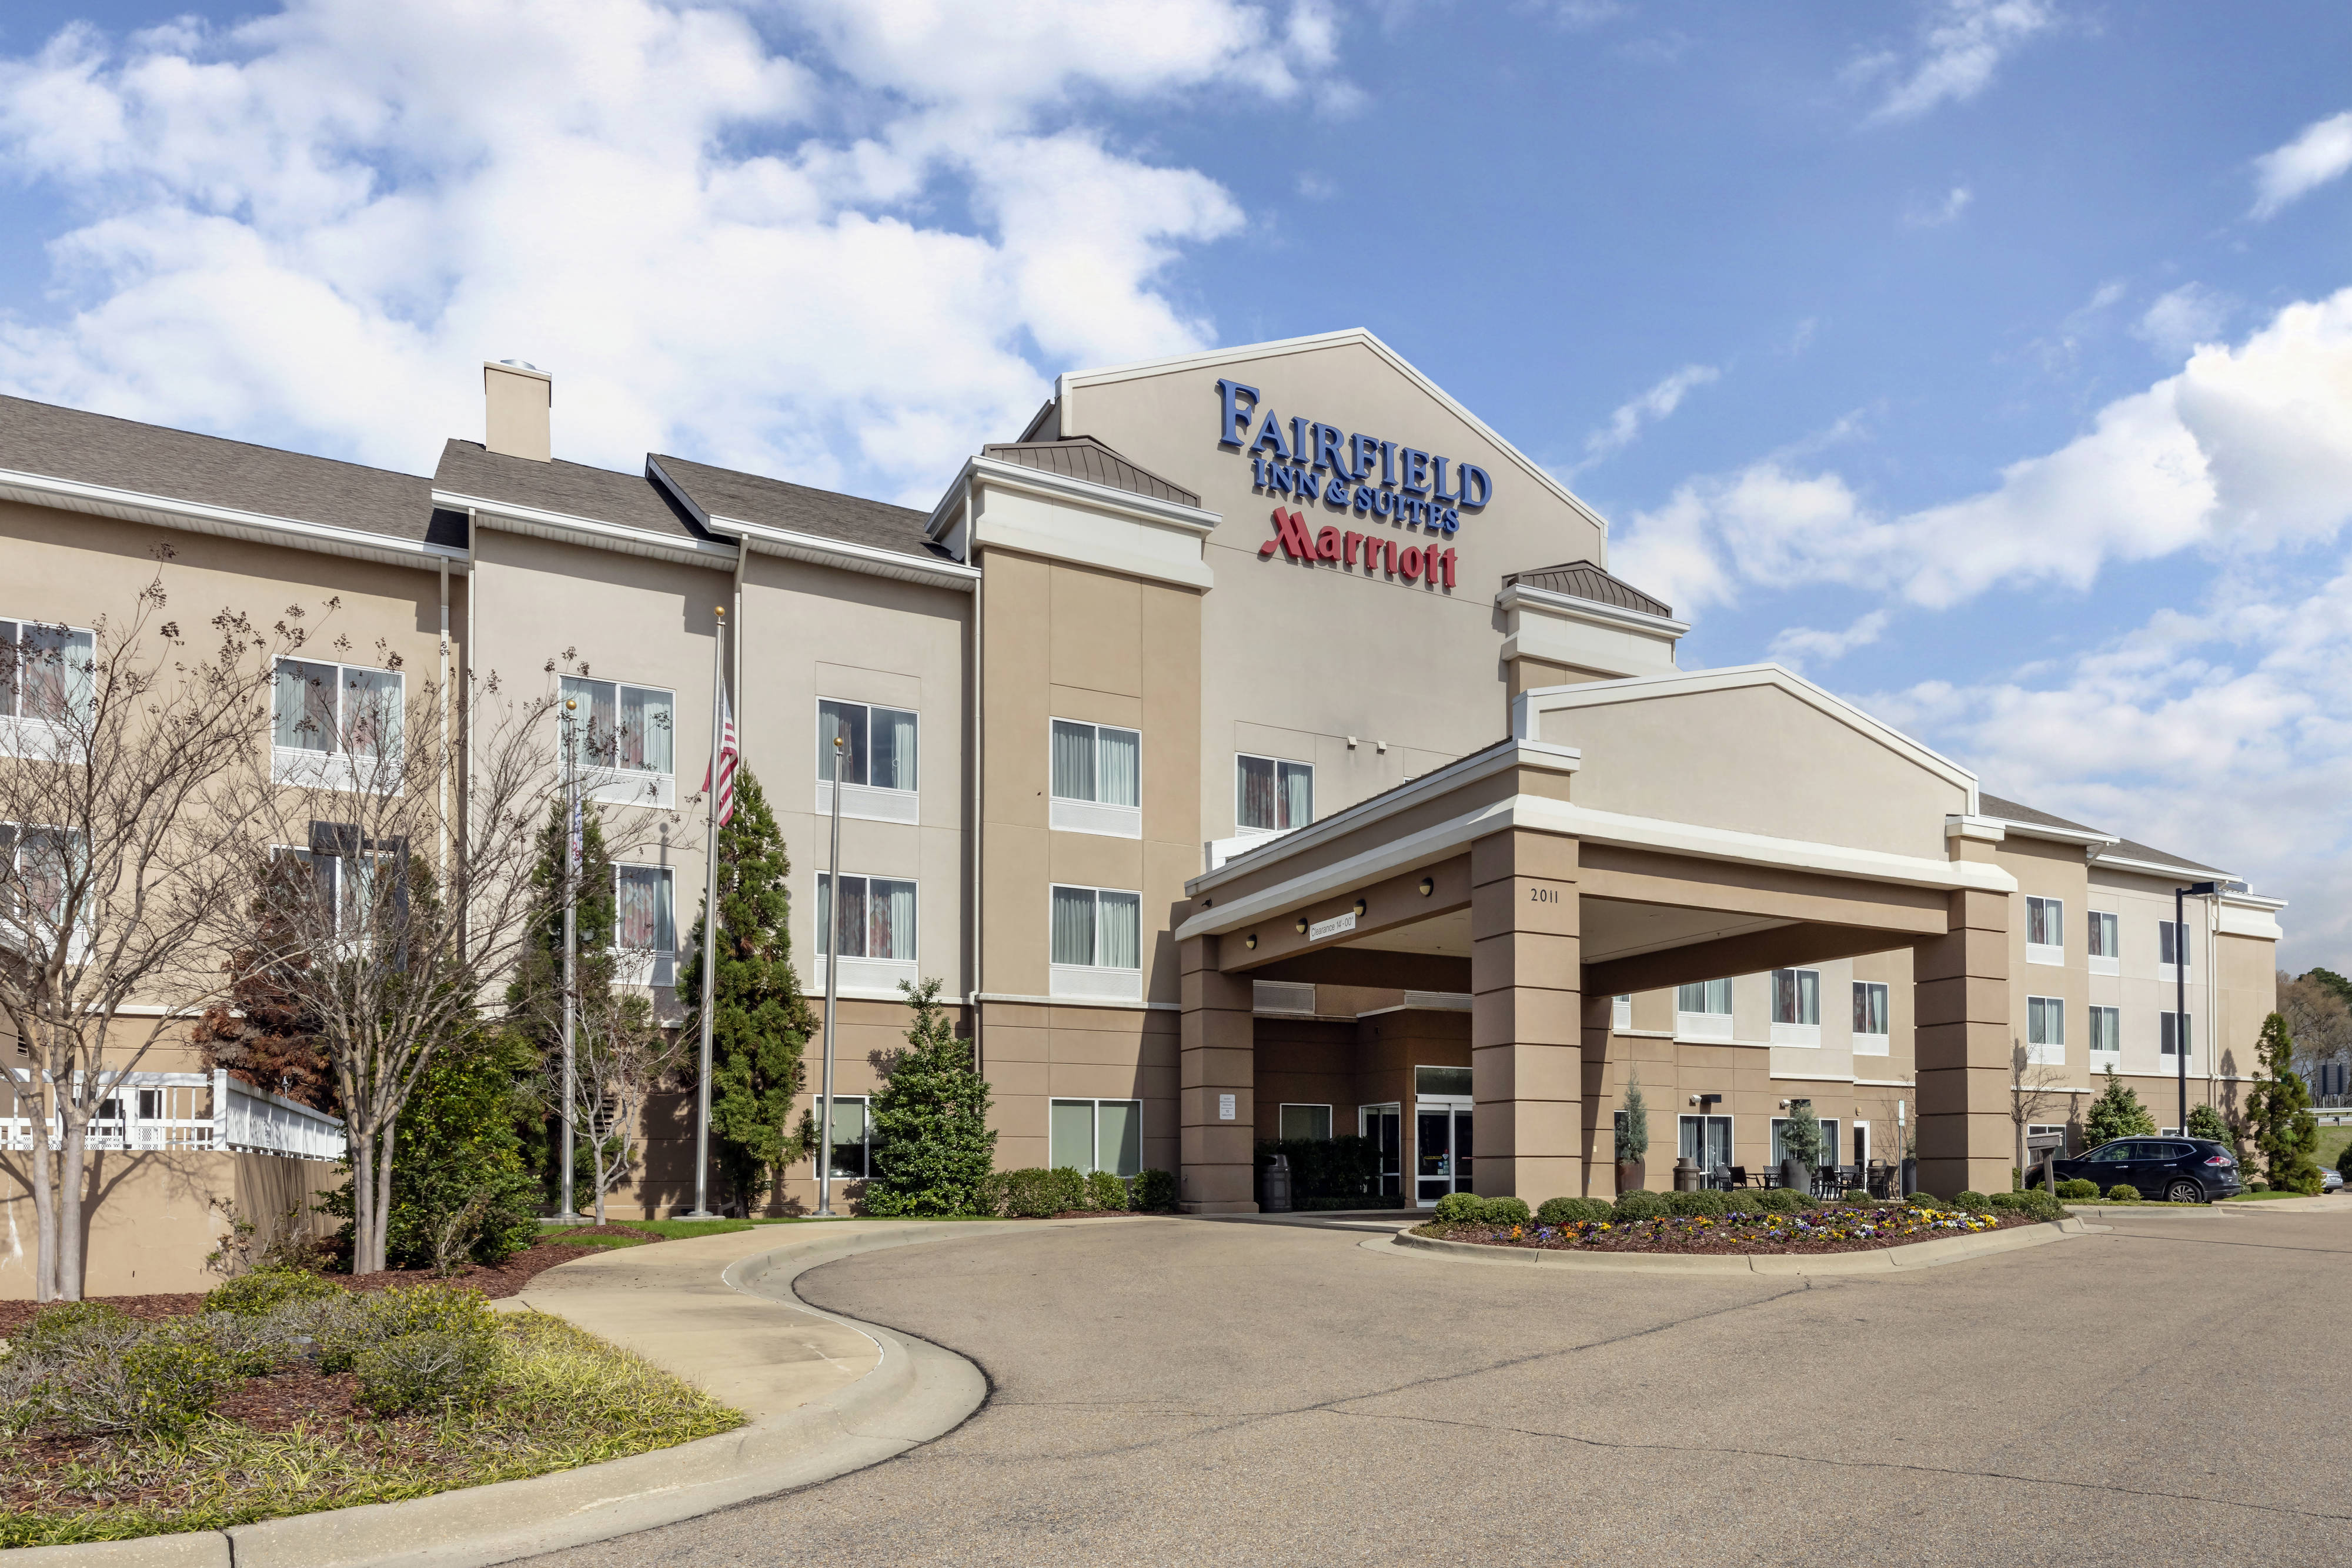 Photo of Fairfield Inn & Suites Columbus, MS, Columbus, MS